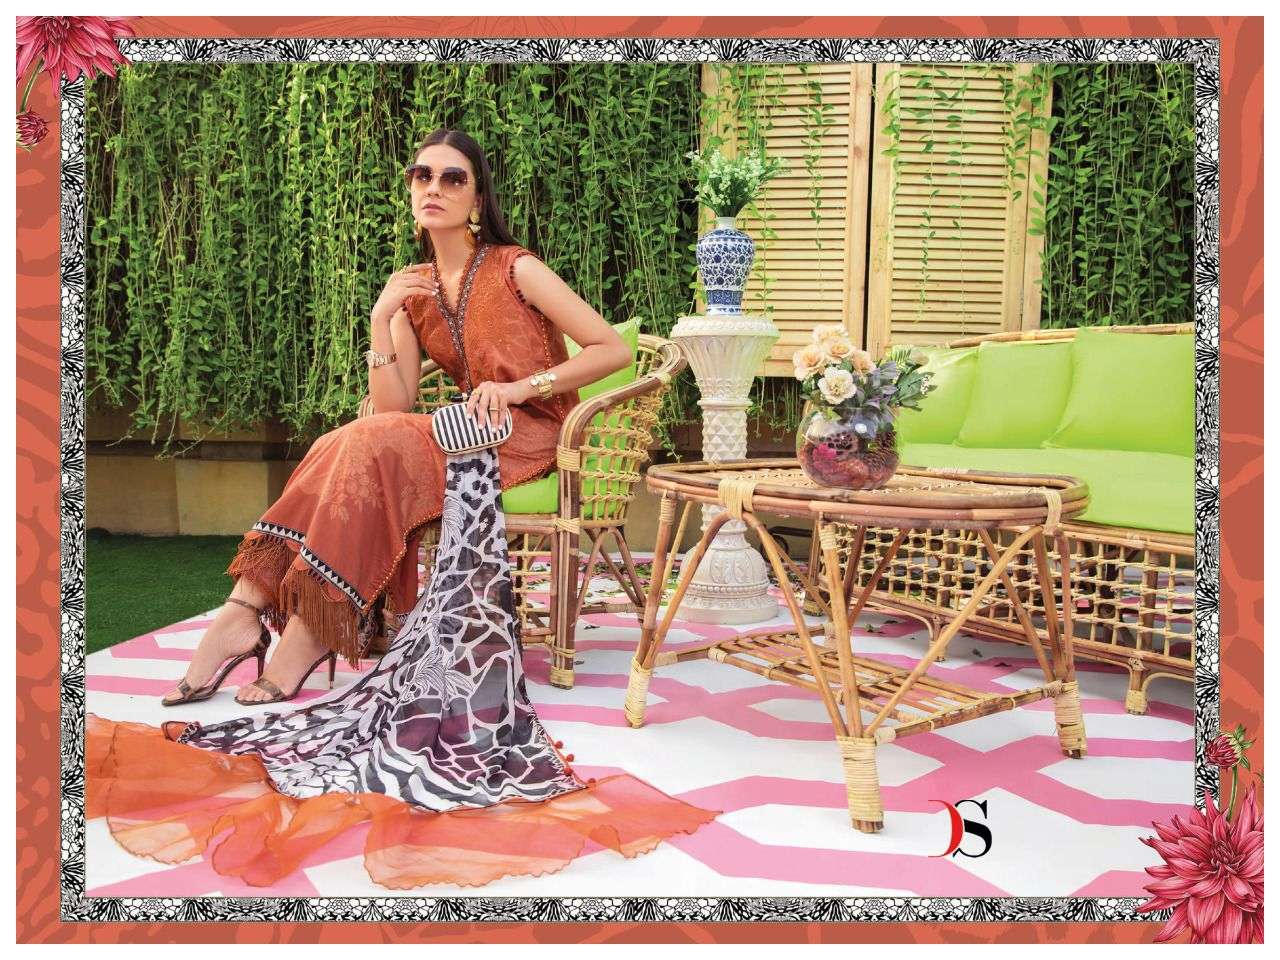 deepsy suits by maria b mprint remix chiffon dupatta salwar kameez online supplier wholesaler surat